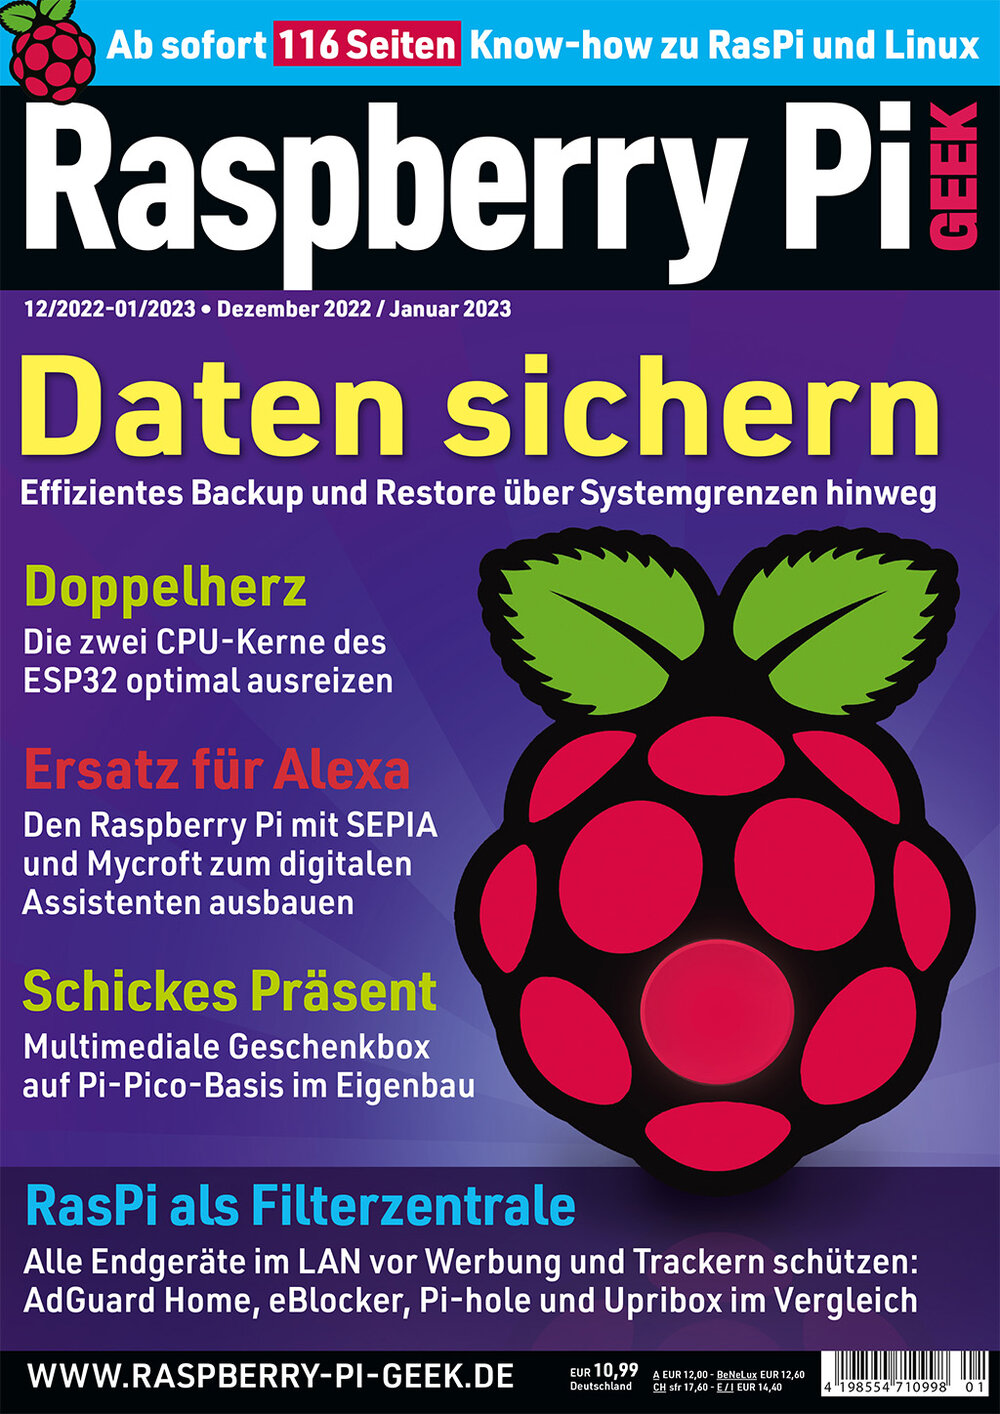 Raspberry Pi Geek-Wunschabo